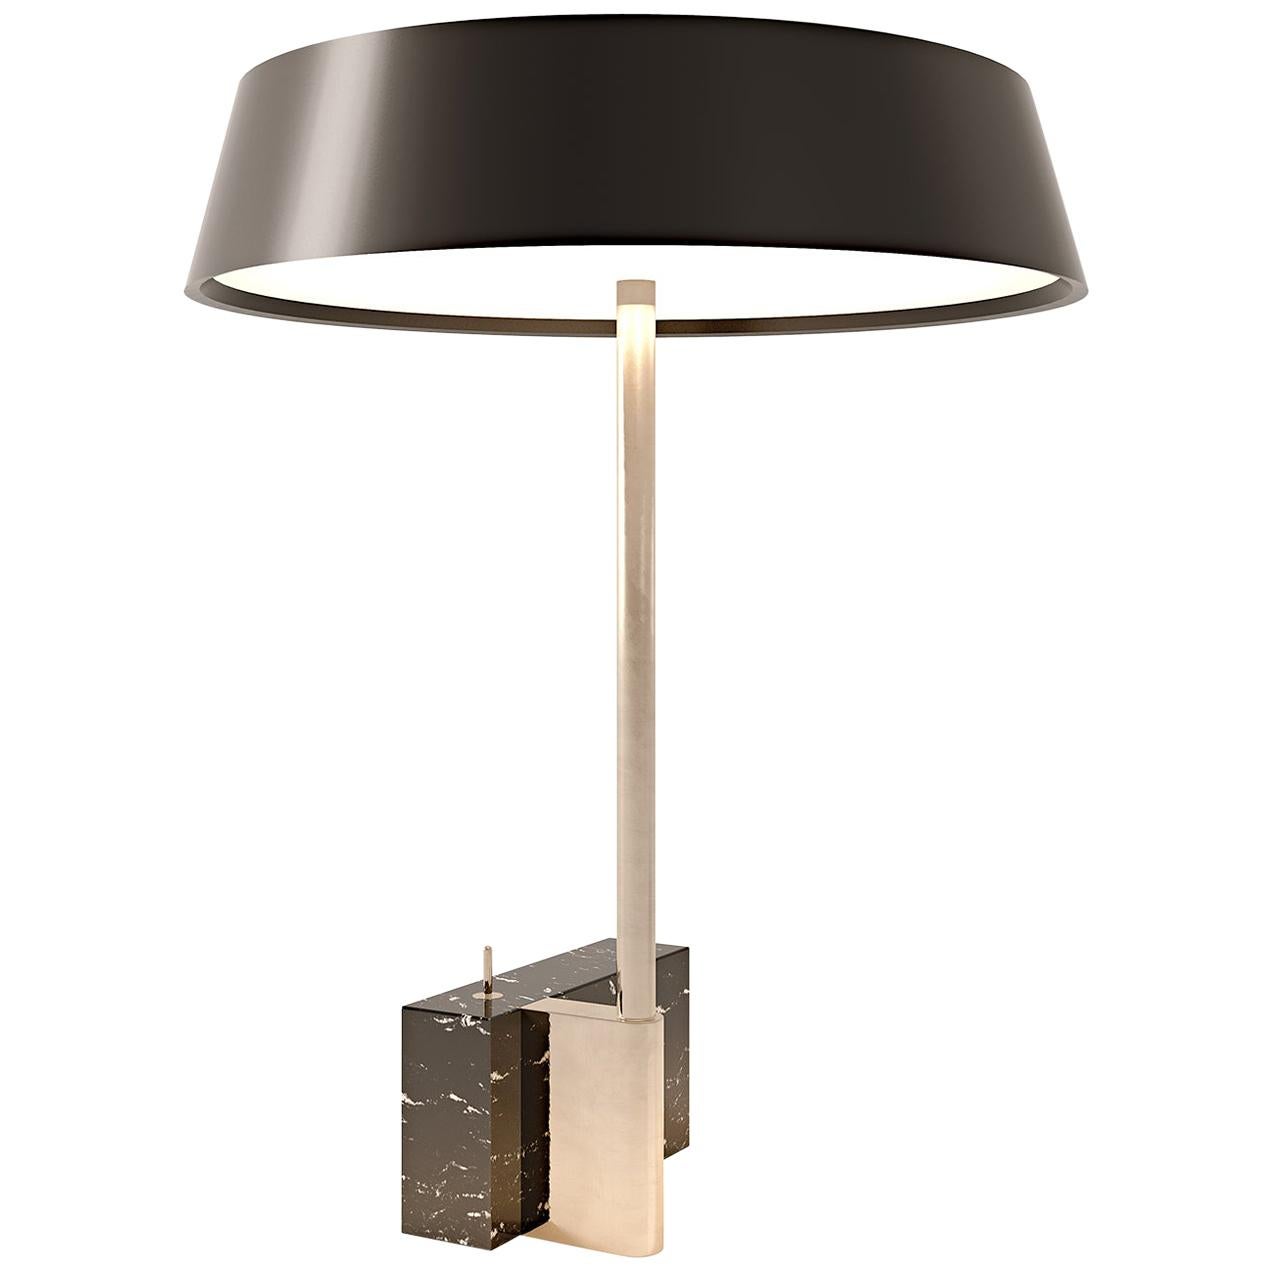 548, Modern design desk lamp for office with marble base